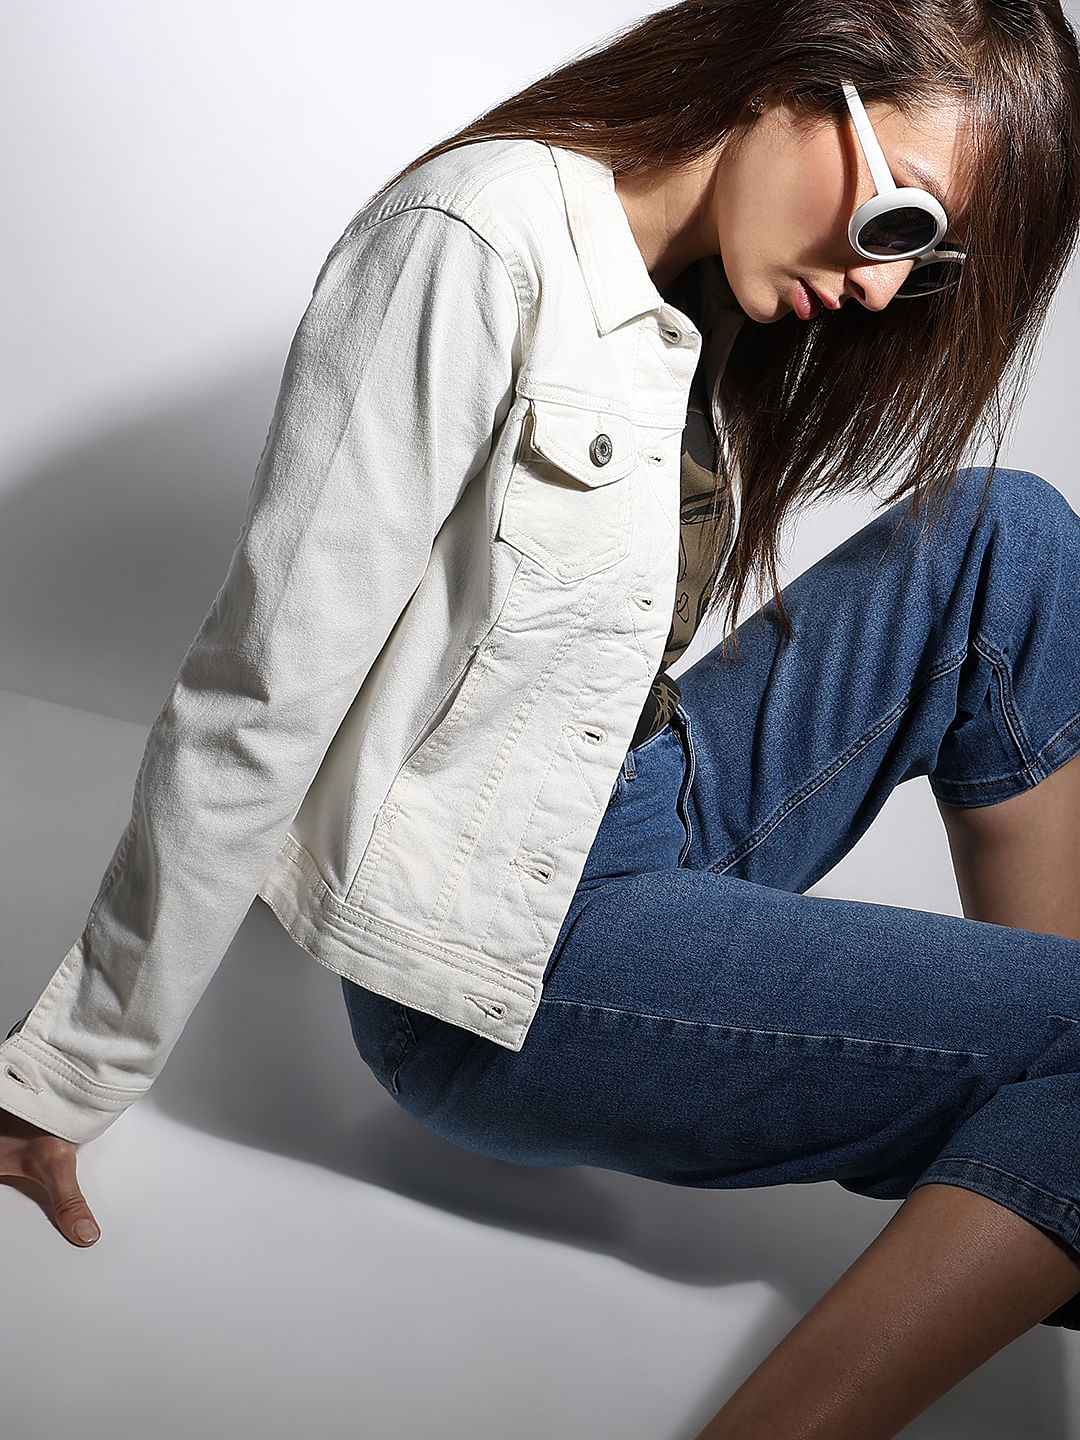 Buy Wrangler Authentics Women's Denim Jacket, Weathered, Medium at Amazon.in